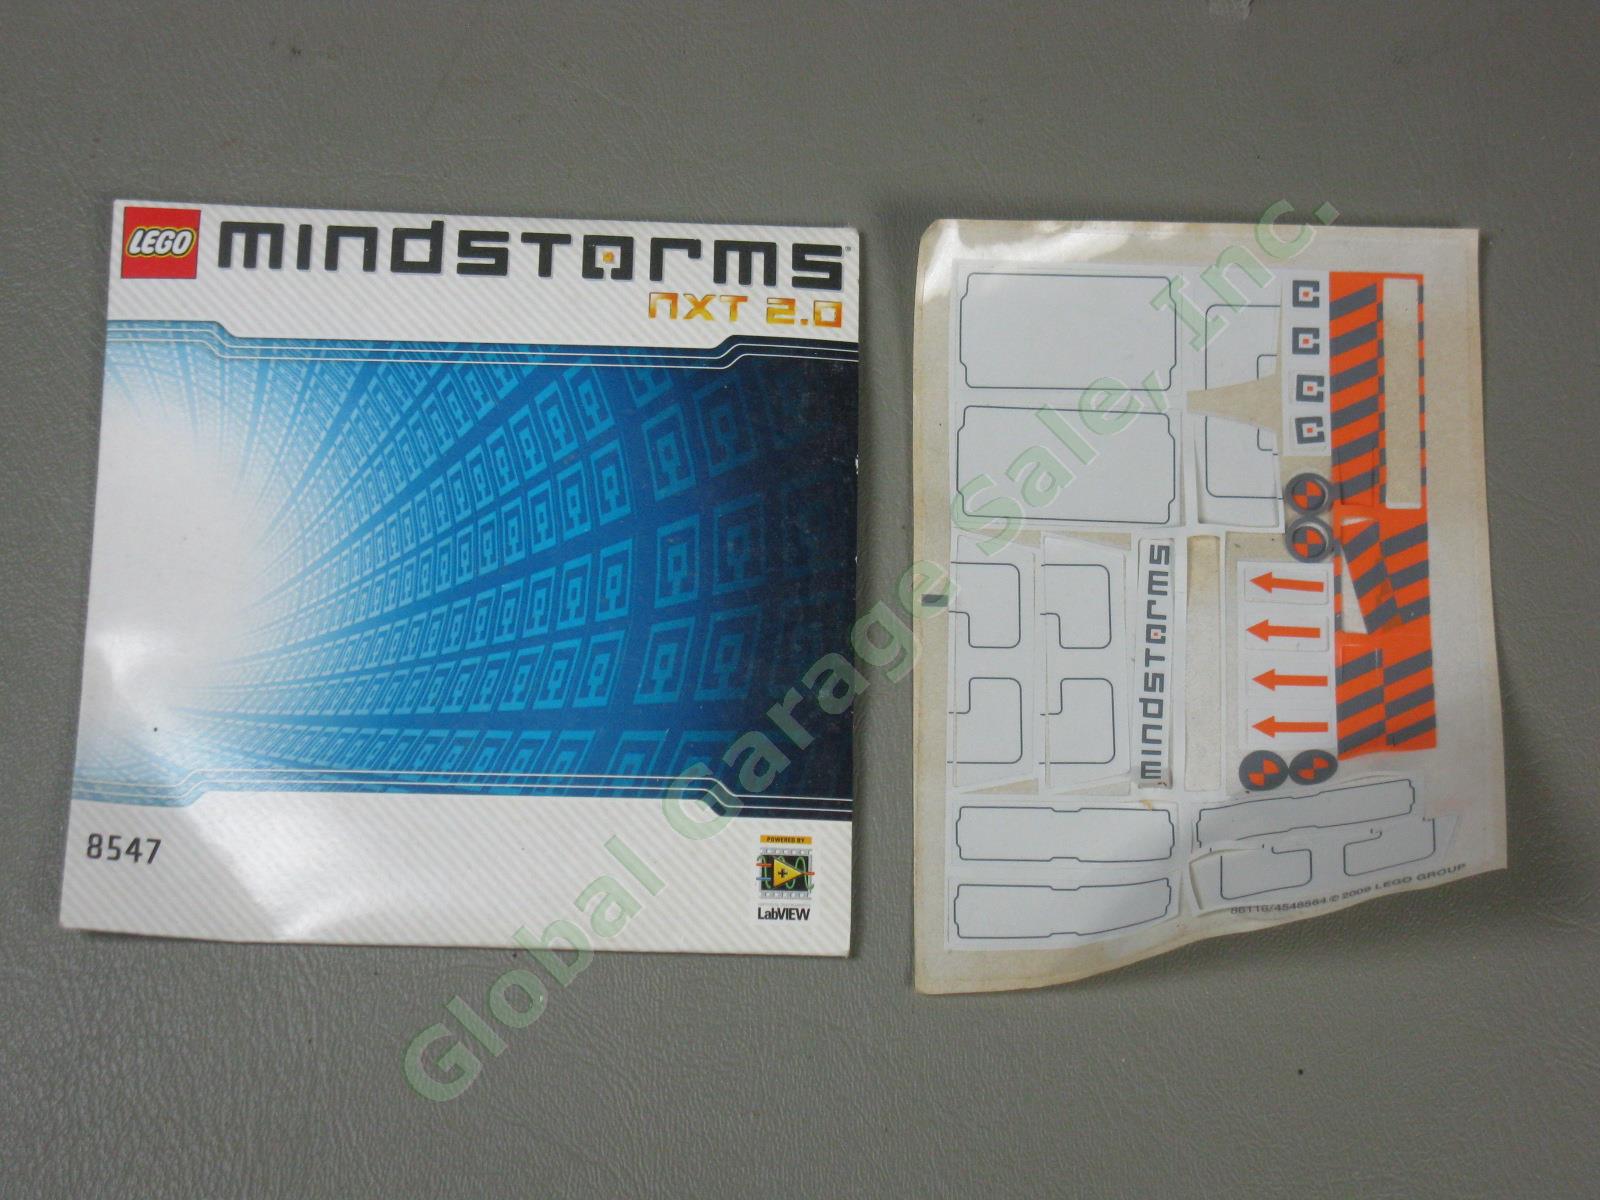 Lego Mindstorms NXT 2.0 8547 Robot Building Set Windows/Mac w/Original Box NR! 20